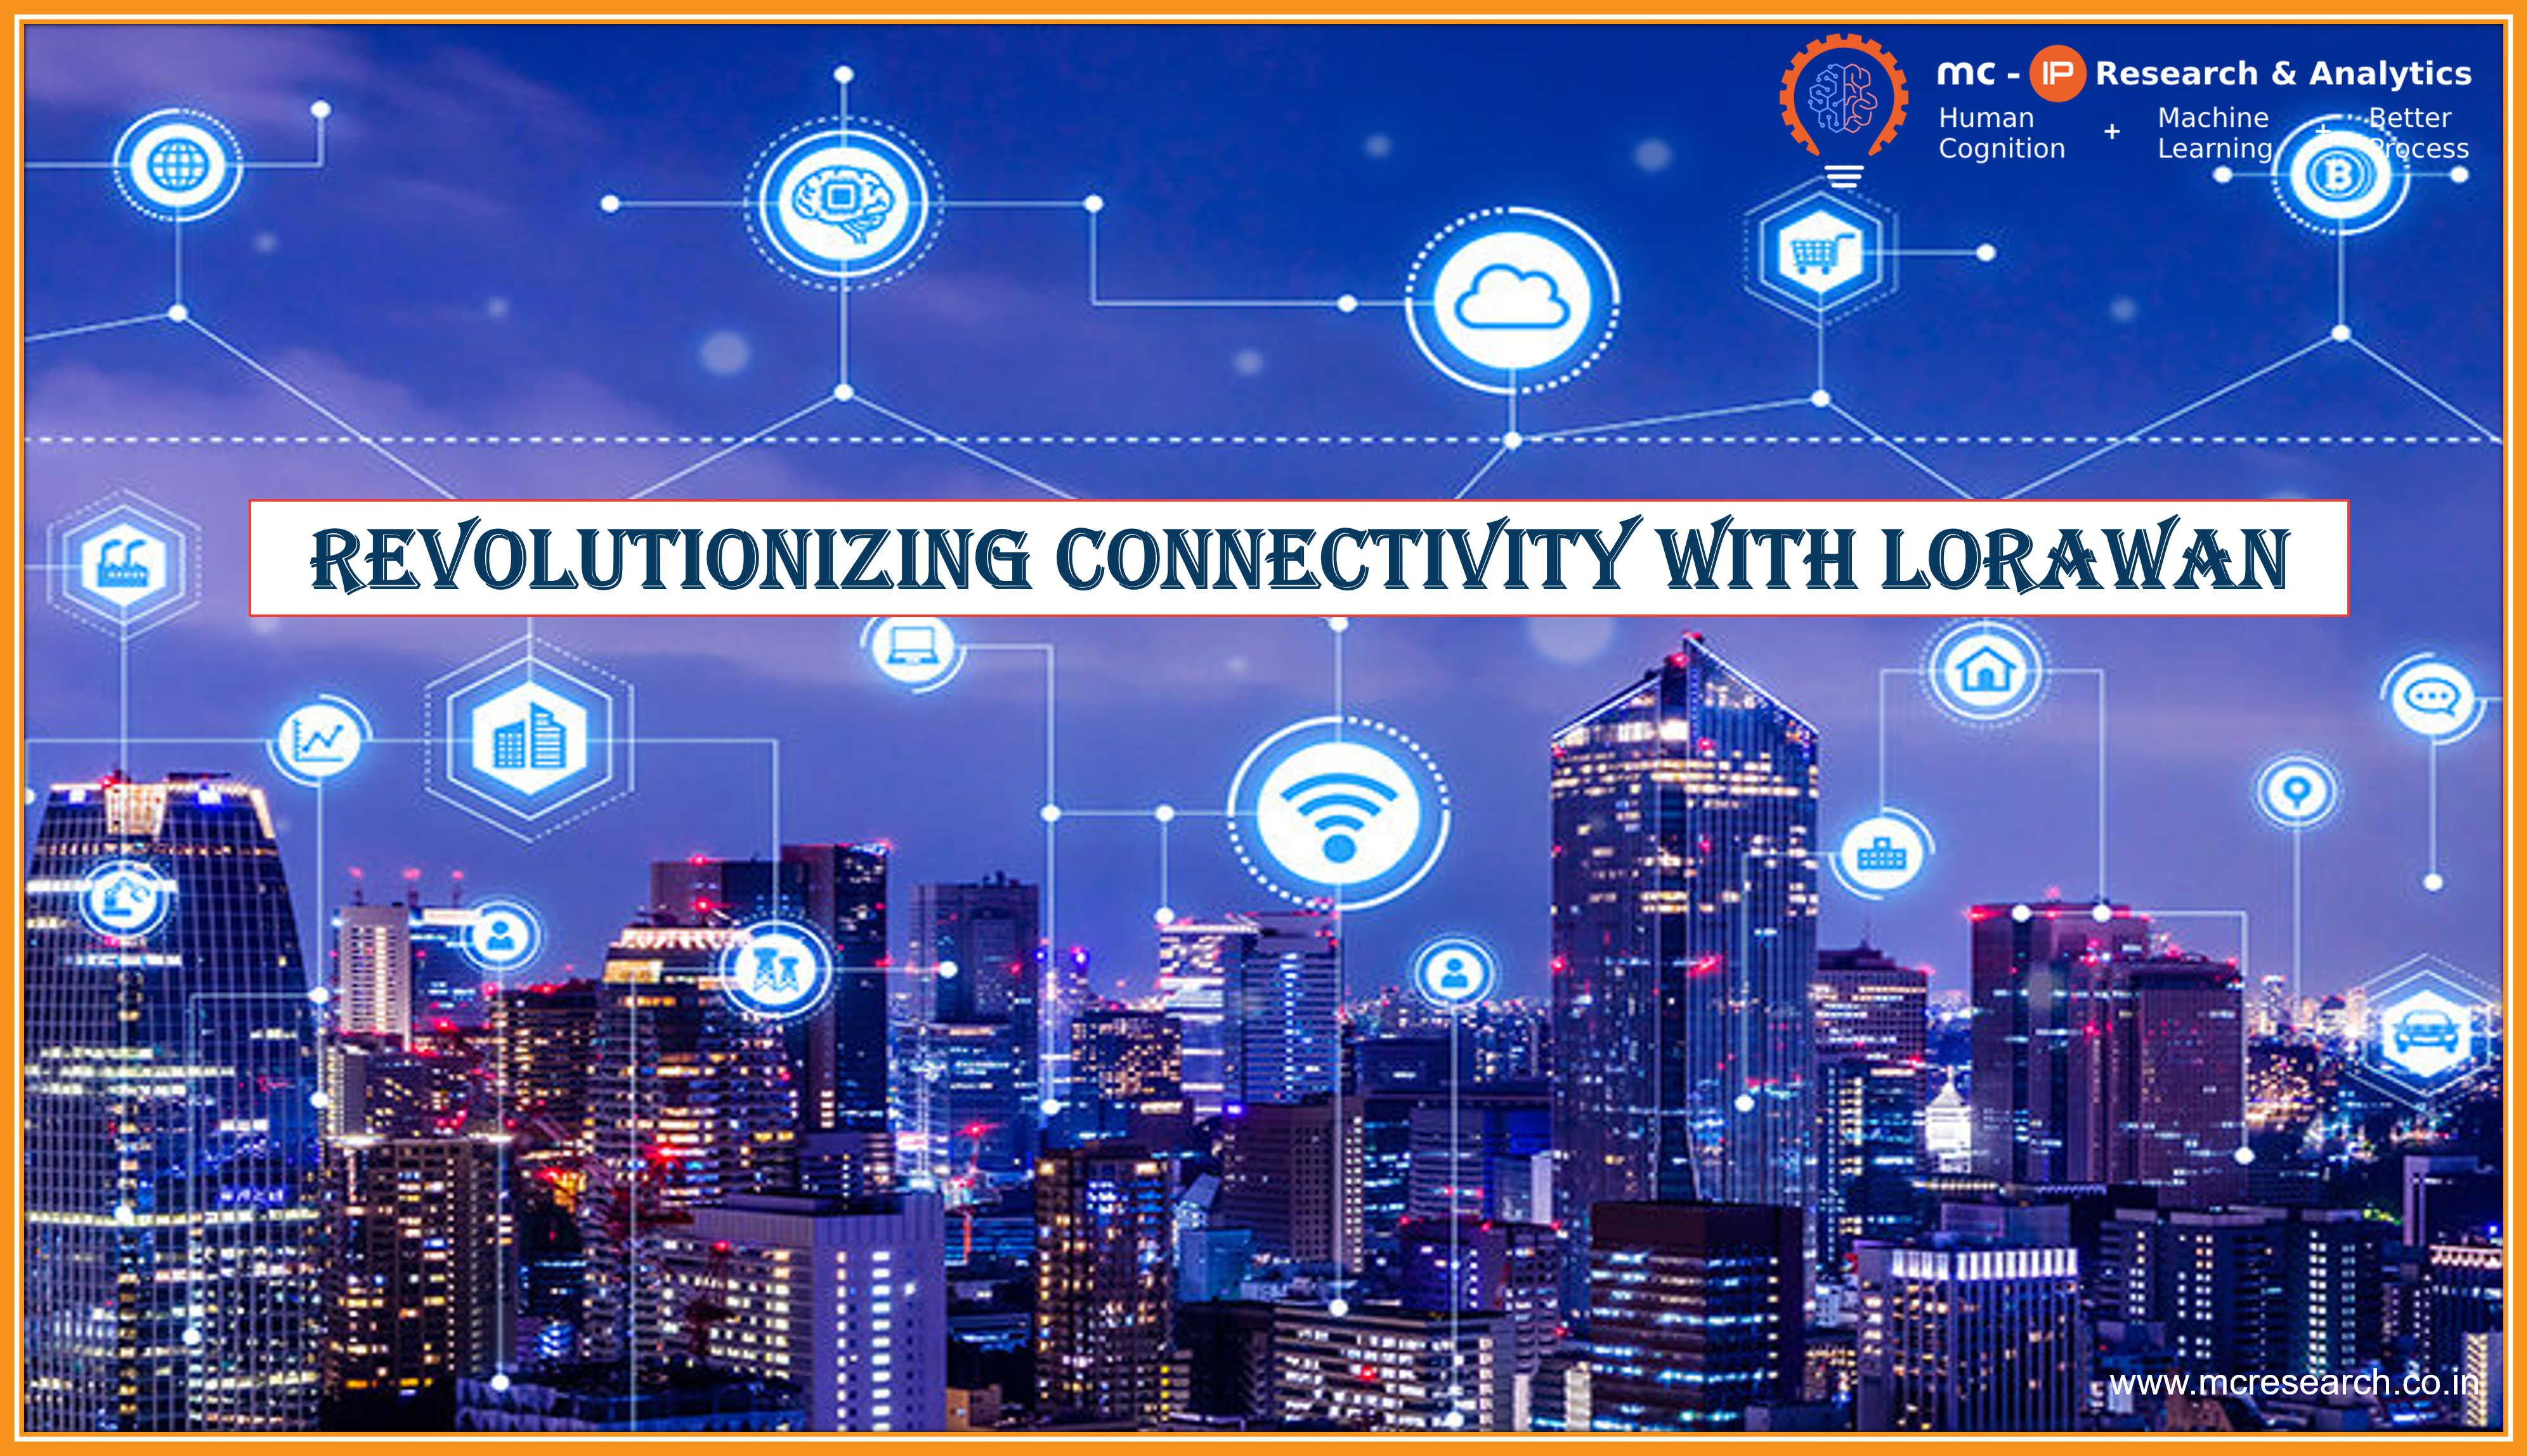 Revolutionizing Connectivity with LoRaWAN